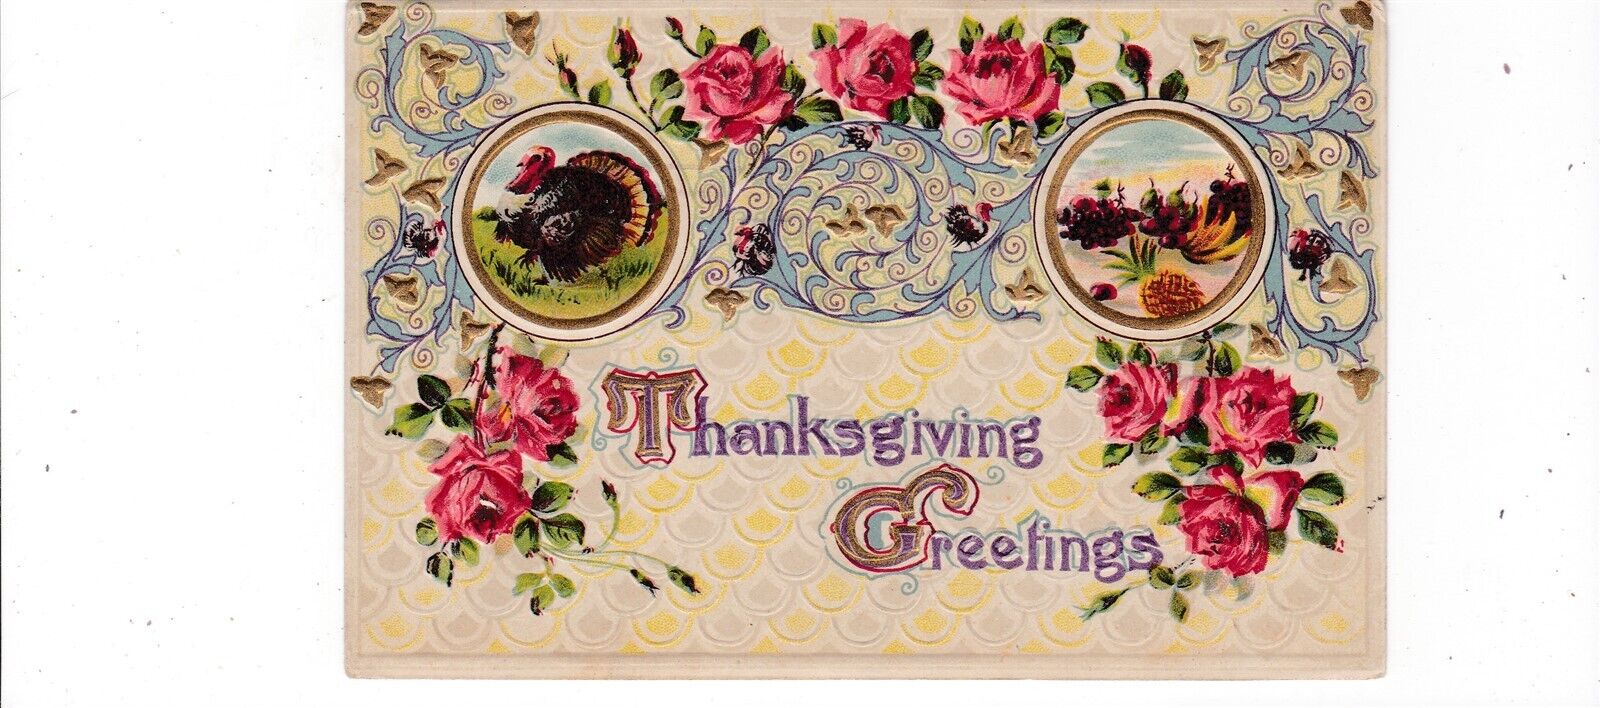 Thanksgiving Greetings antique postcard / turkey roses scrolls series 2374